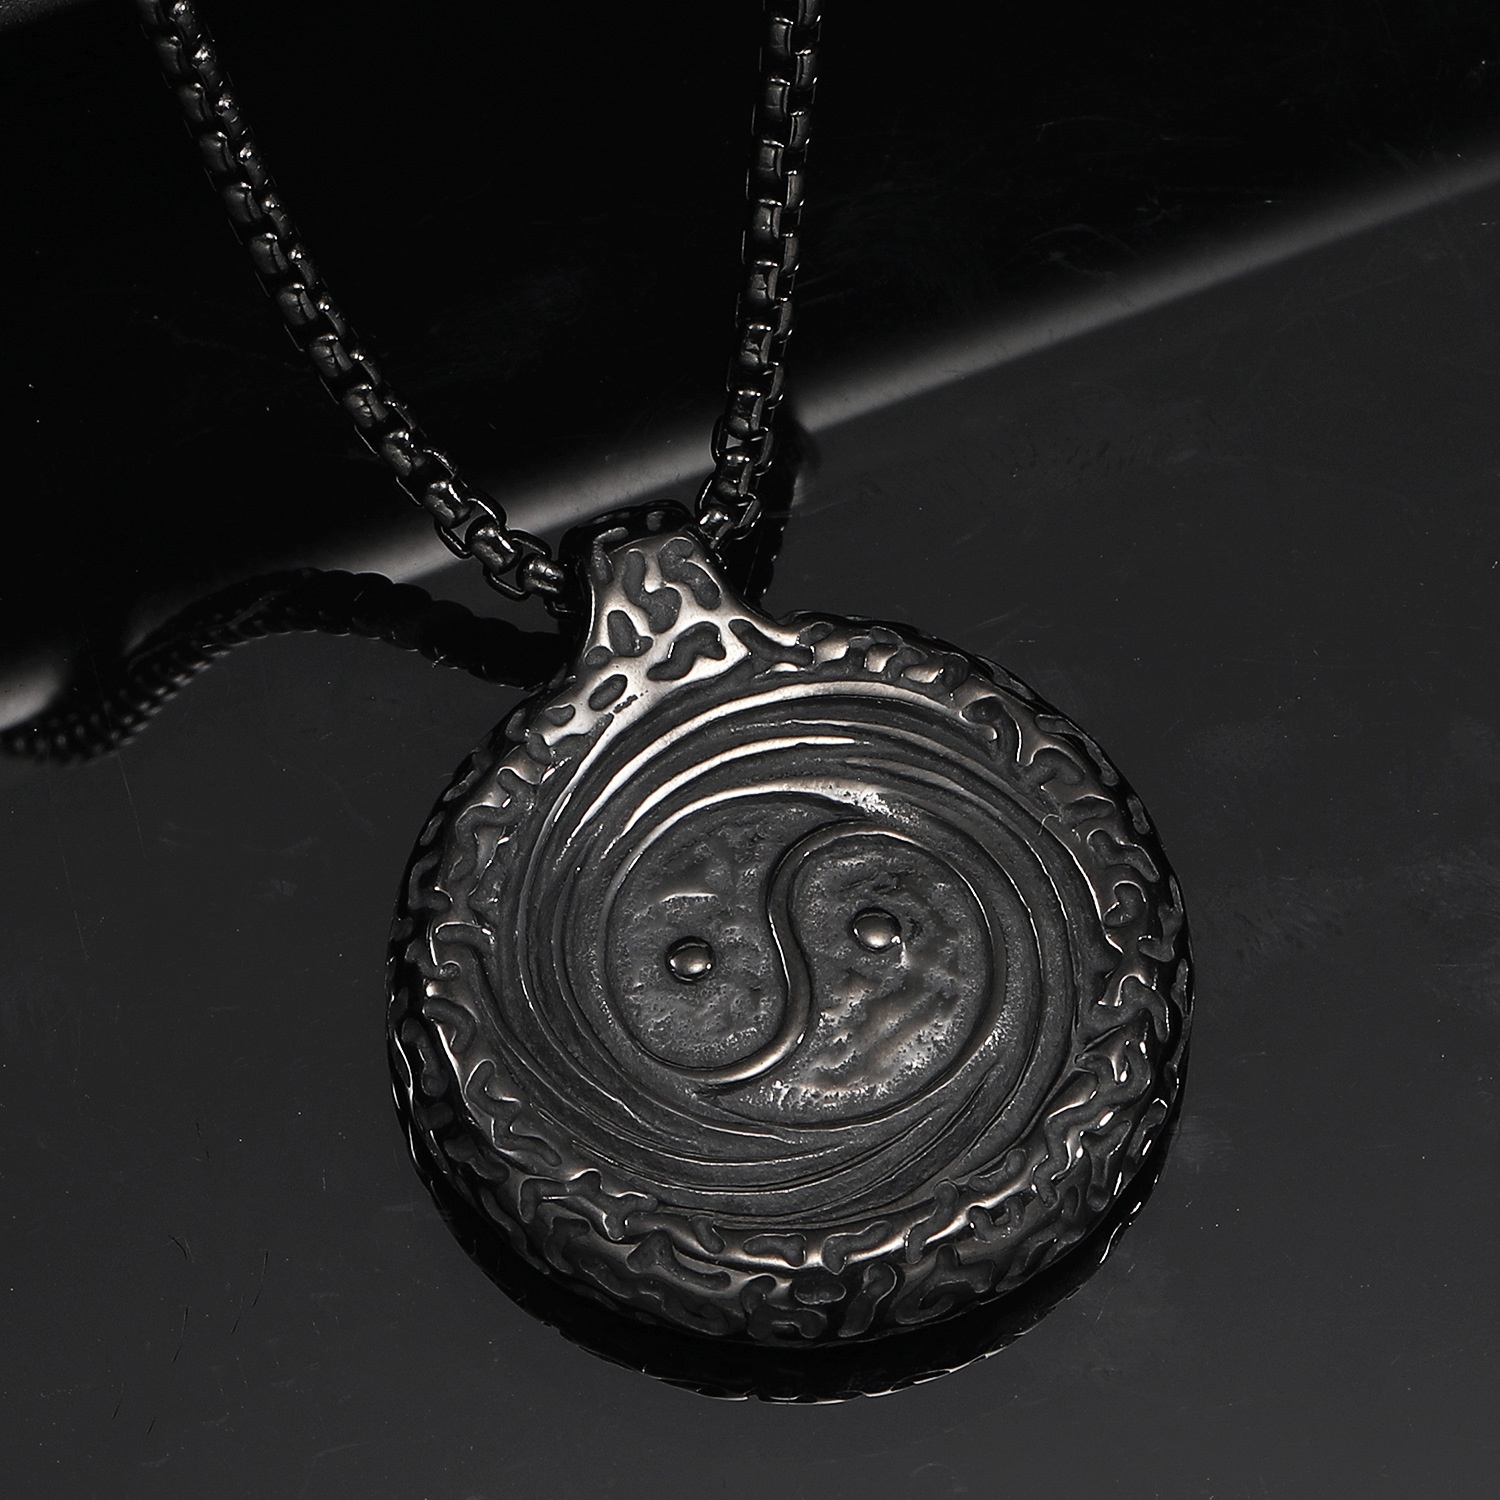 3:Black pendant